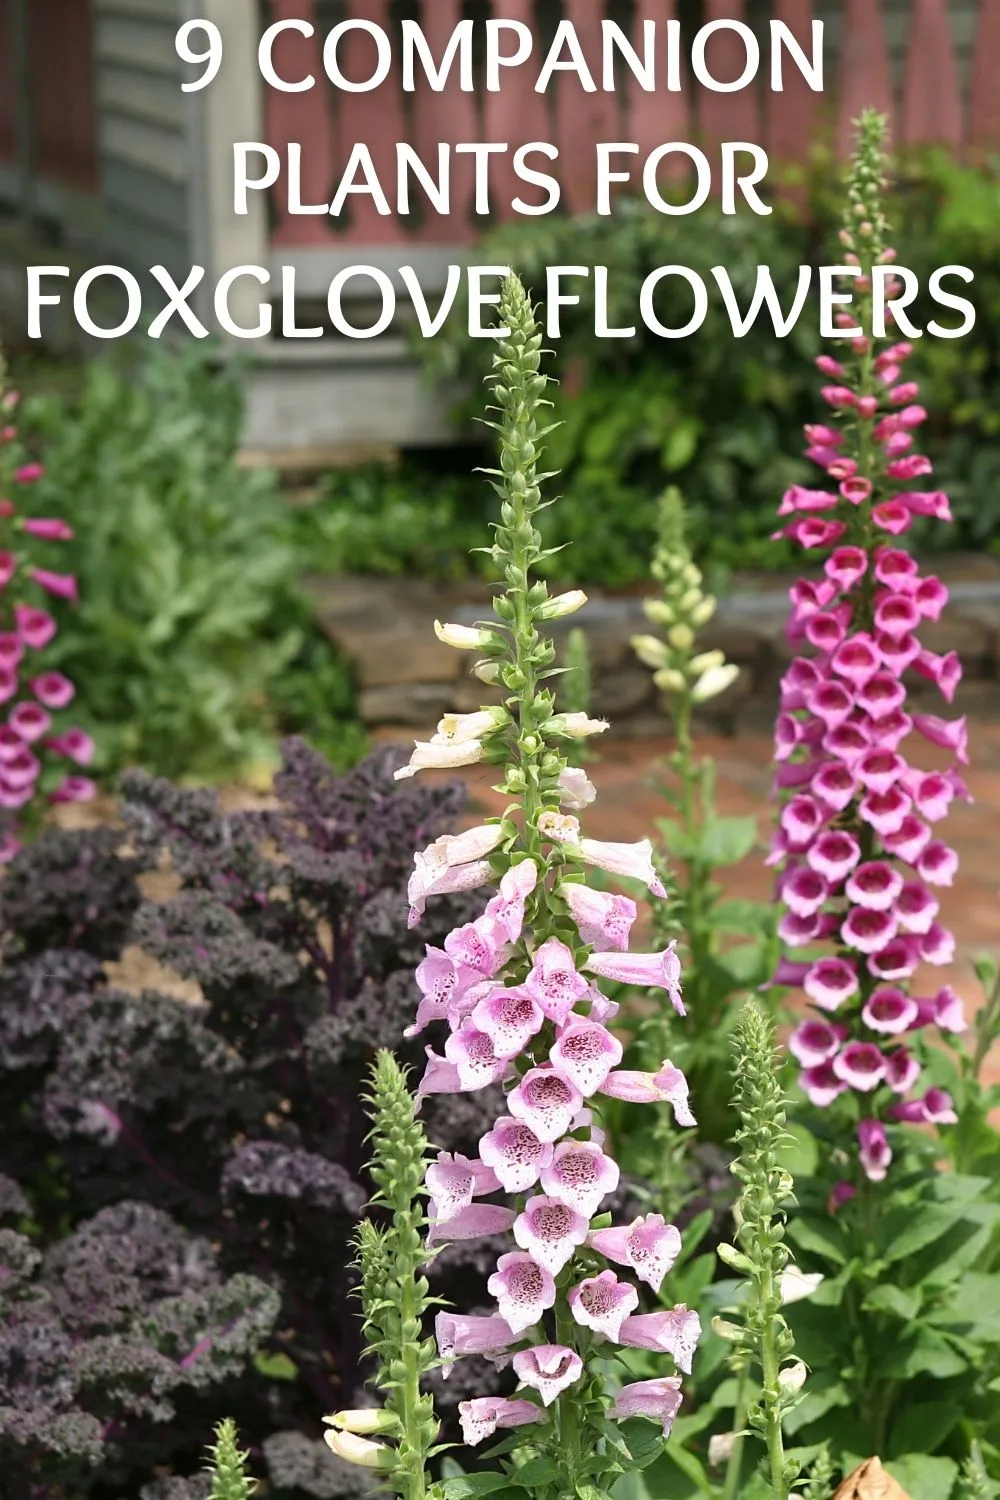 9 companion plants for foxglove flowers